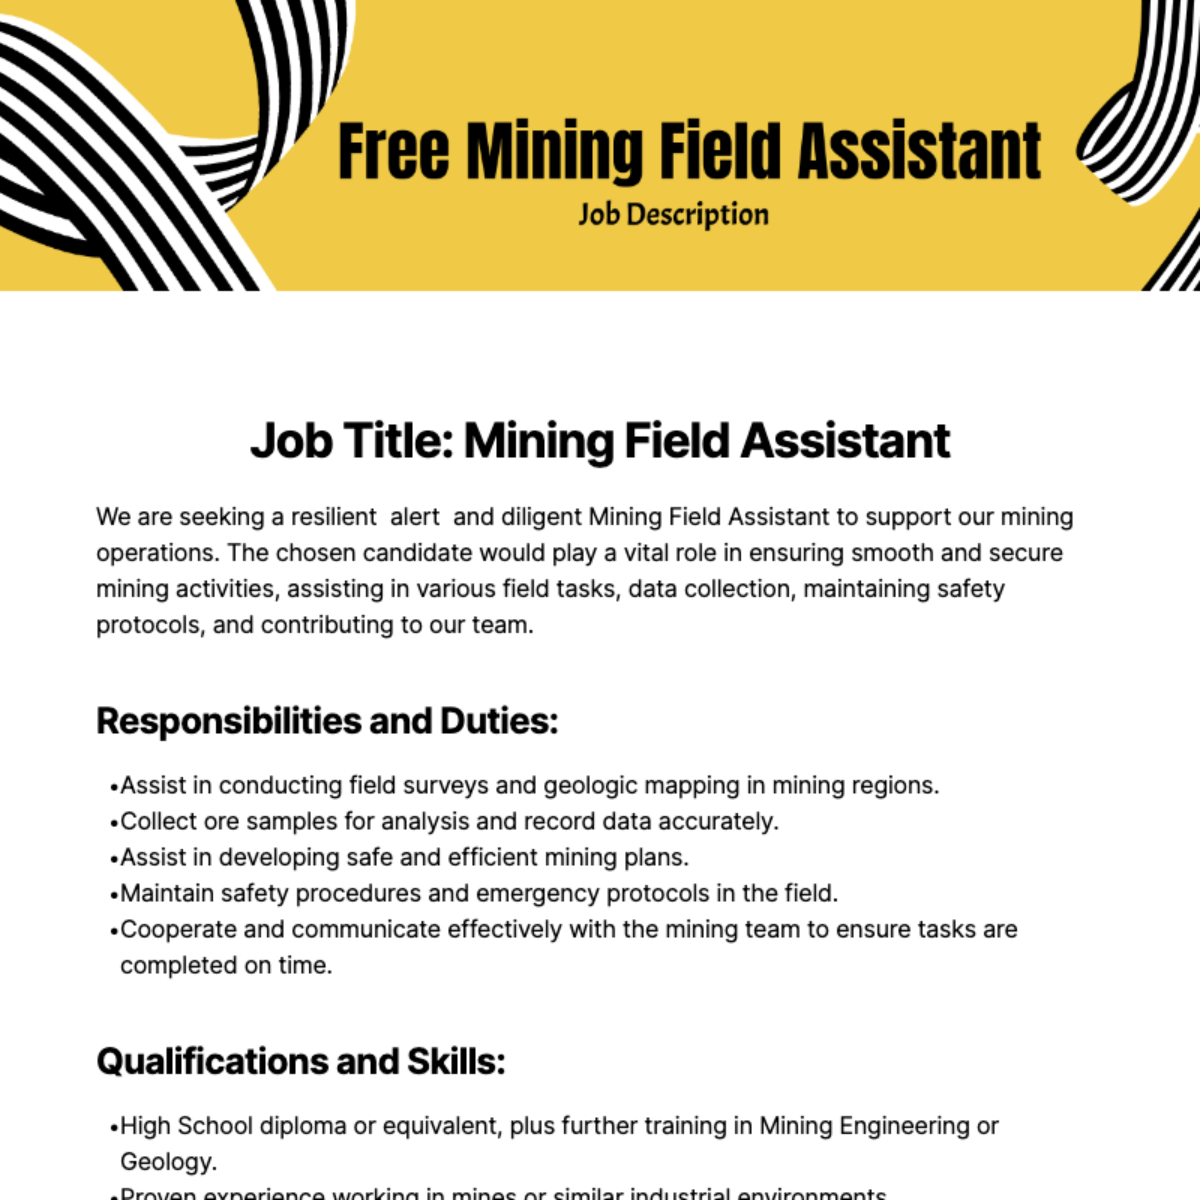 Free Mining Field Assistant Job Description Template